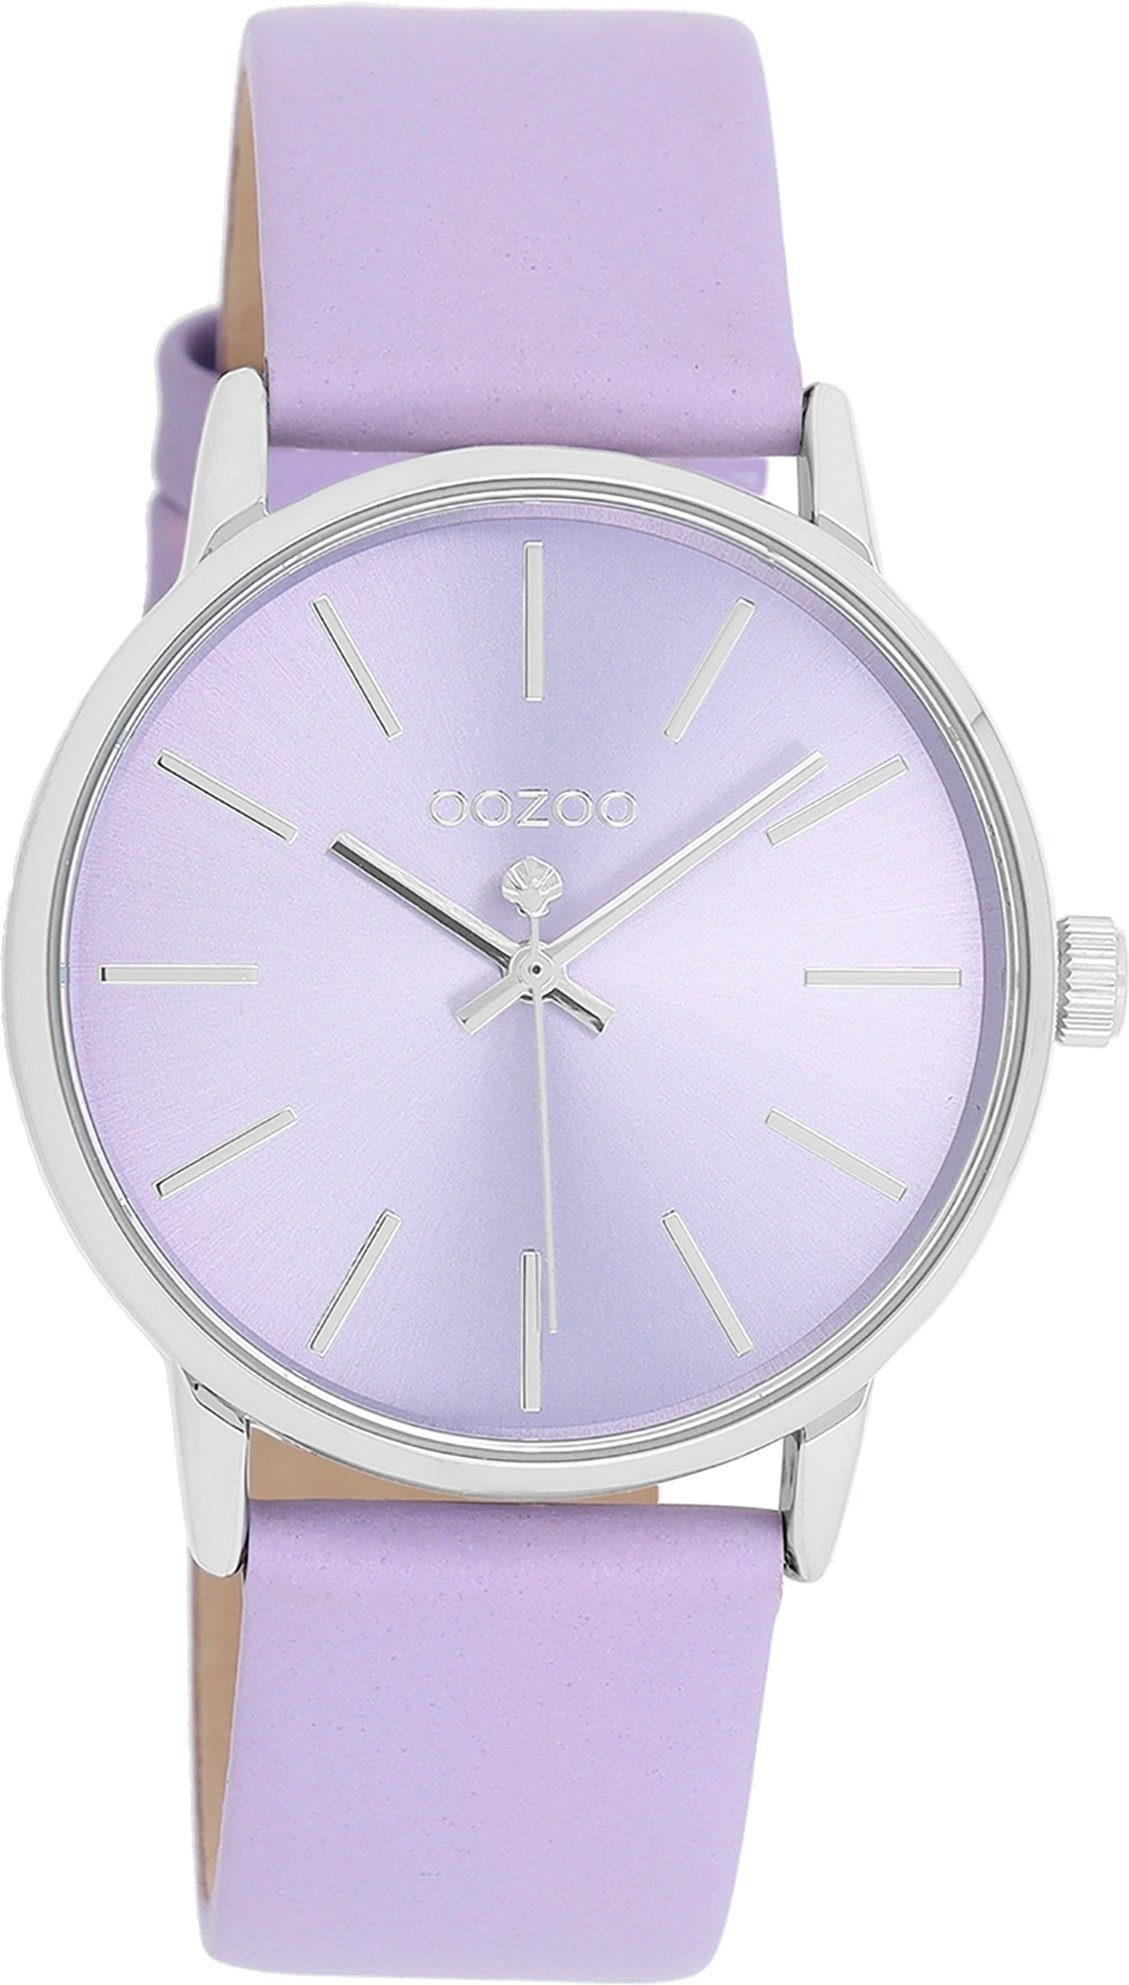 rund, (ca. Analog, Timepieces 36mm) Fashion-Style Oozoo Armbanduhr mittel Lederarmband, OOZOO Quarzuhr Damenuhr Damen